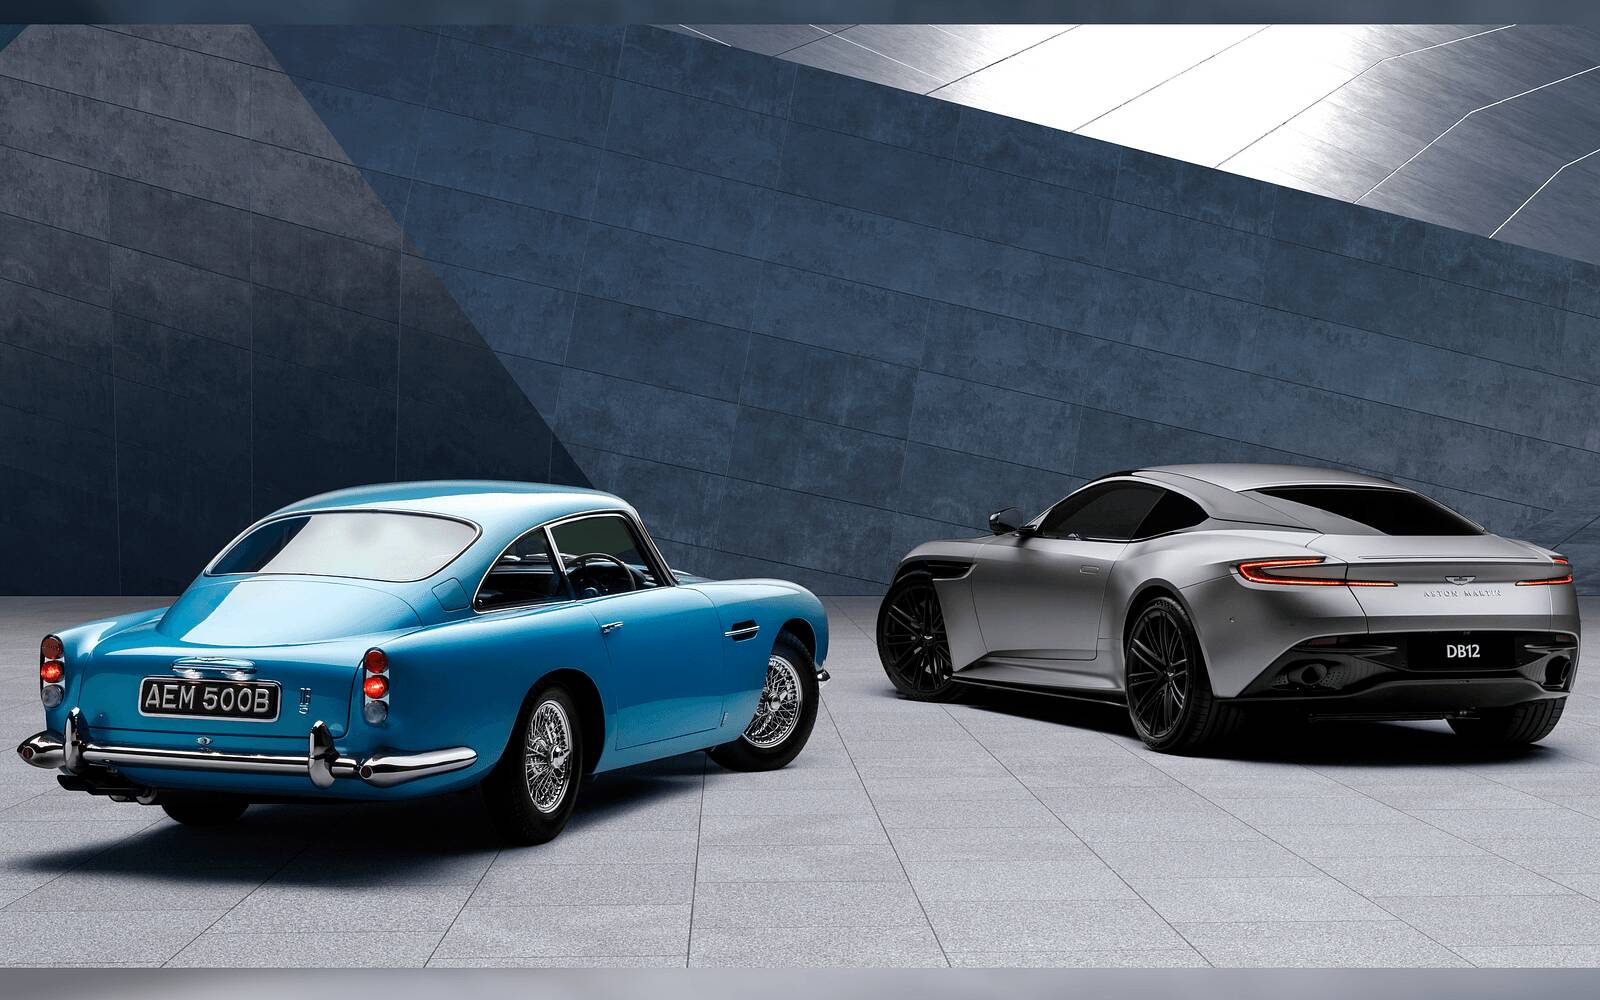 La célèbre et ravissante Aston Martin DB5 a 60 ans 588123-la-celebre-et-ravissante-aston-martin-db5-a-60-ans